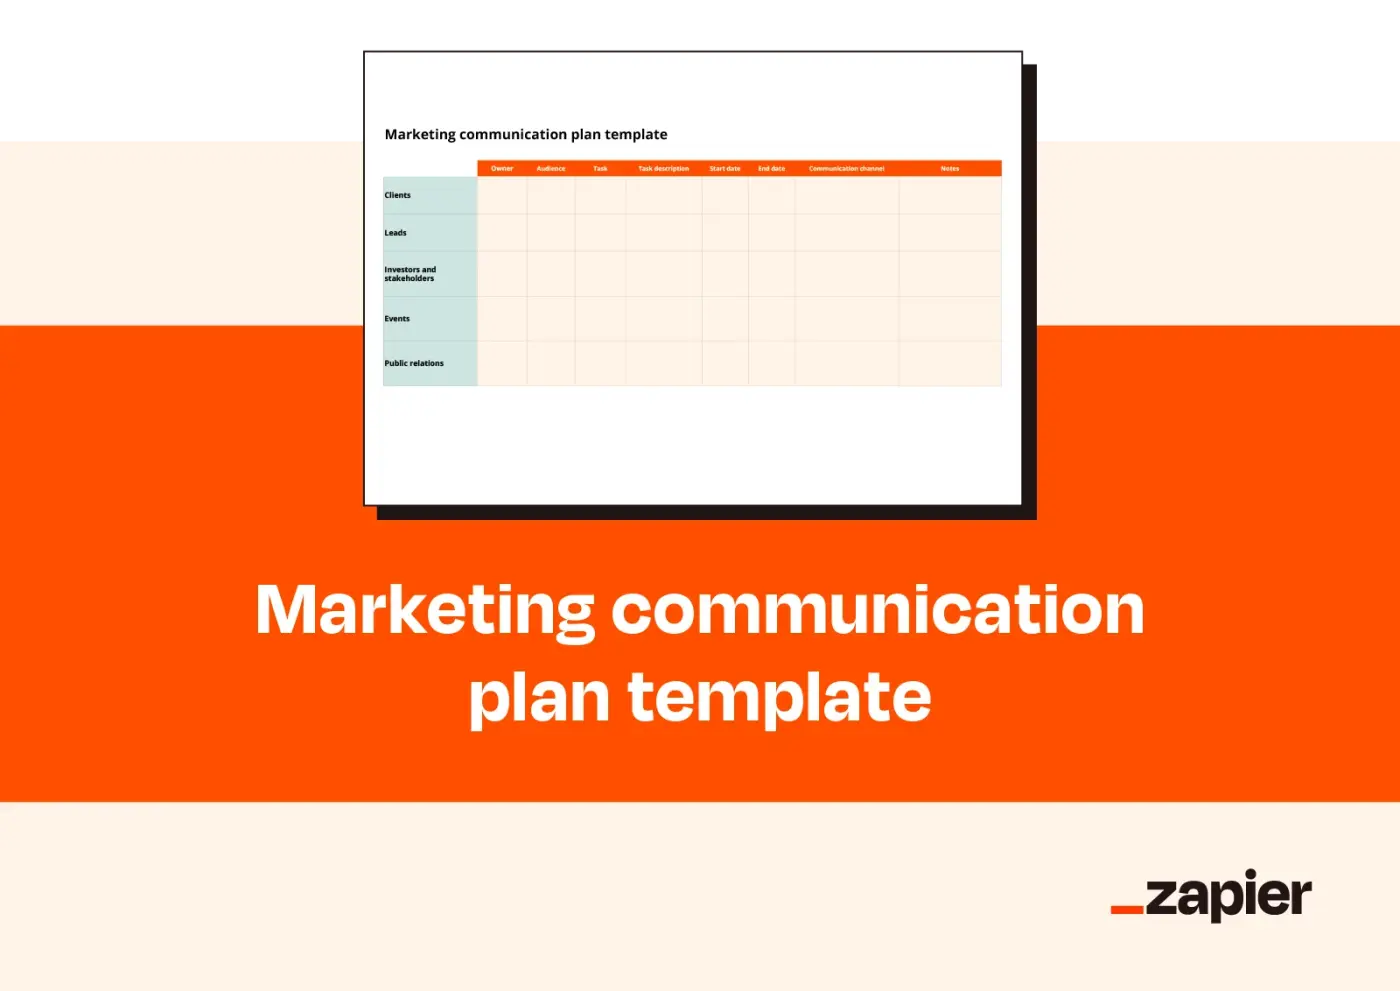 Mockup showcasing Zapier's marketing communication plan template